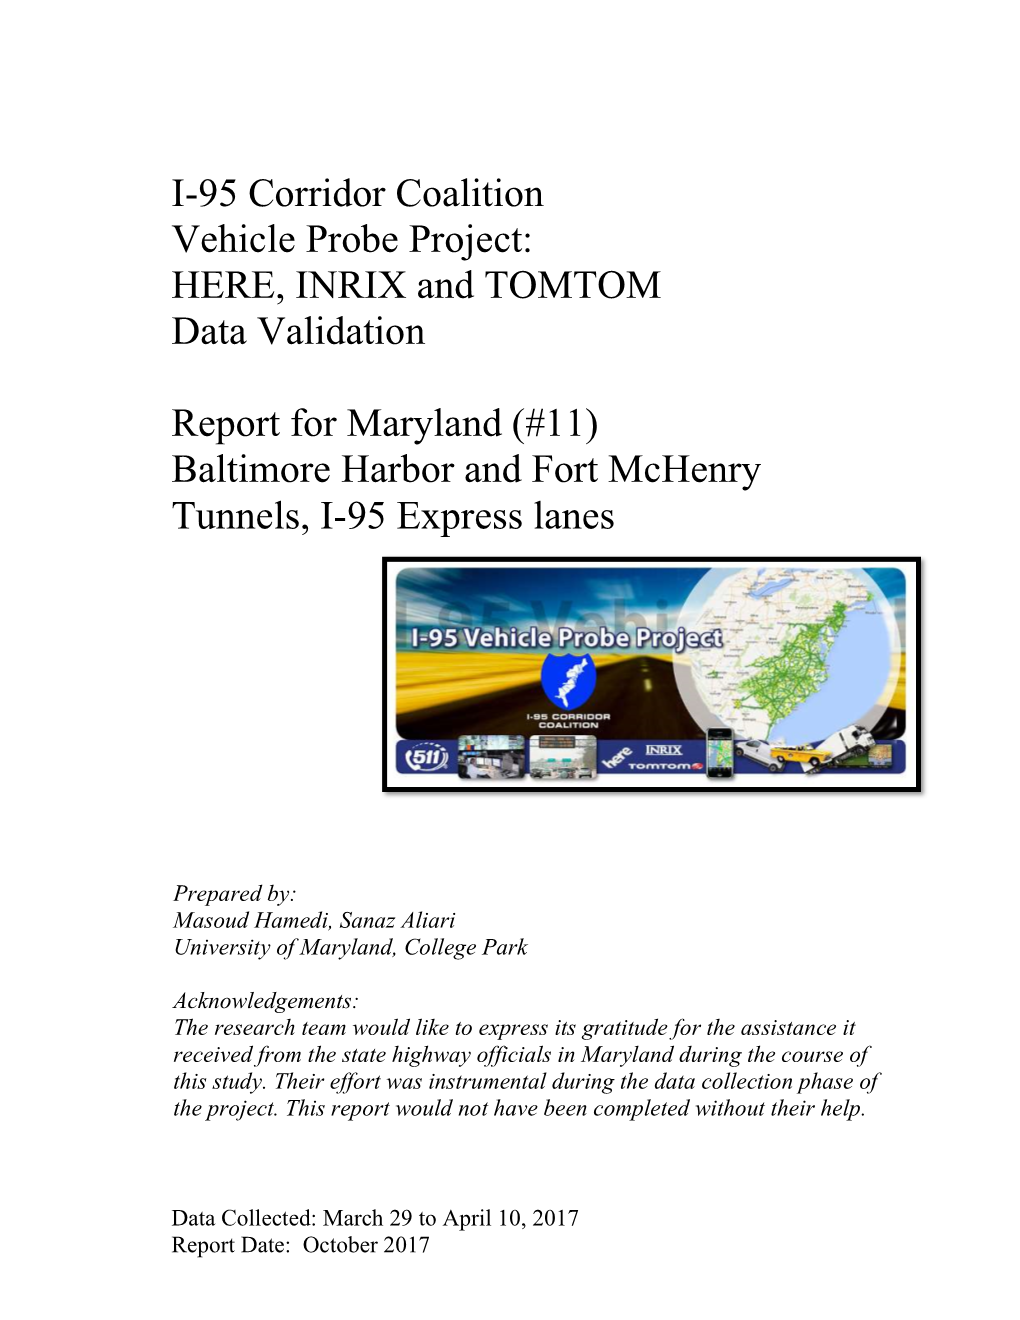 I-95 Corridor Coalition Vehicle Probe Project Data Validation – MD #11 – I-895 and I-95 EXP 1 October 2017